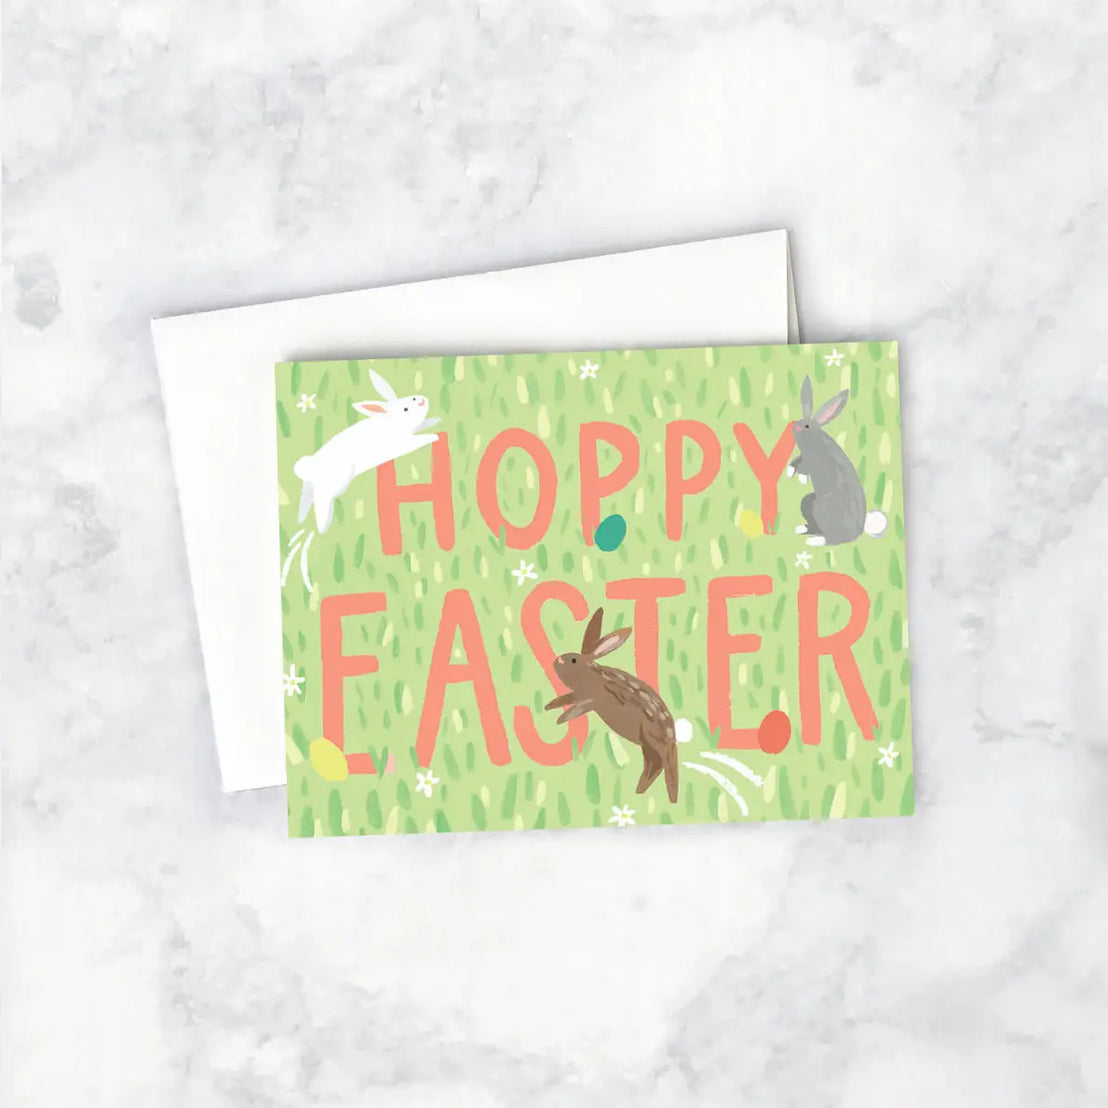 Hoppy Easter, Idlewild Co.